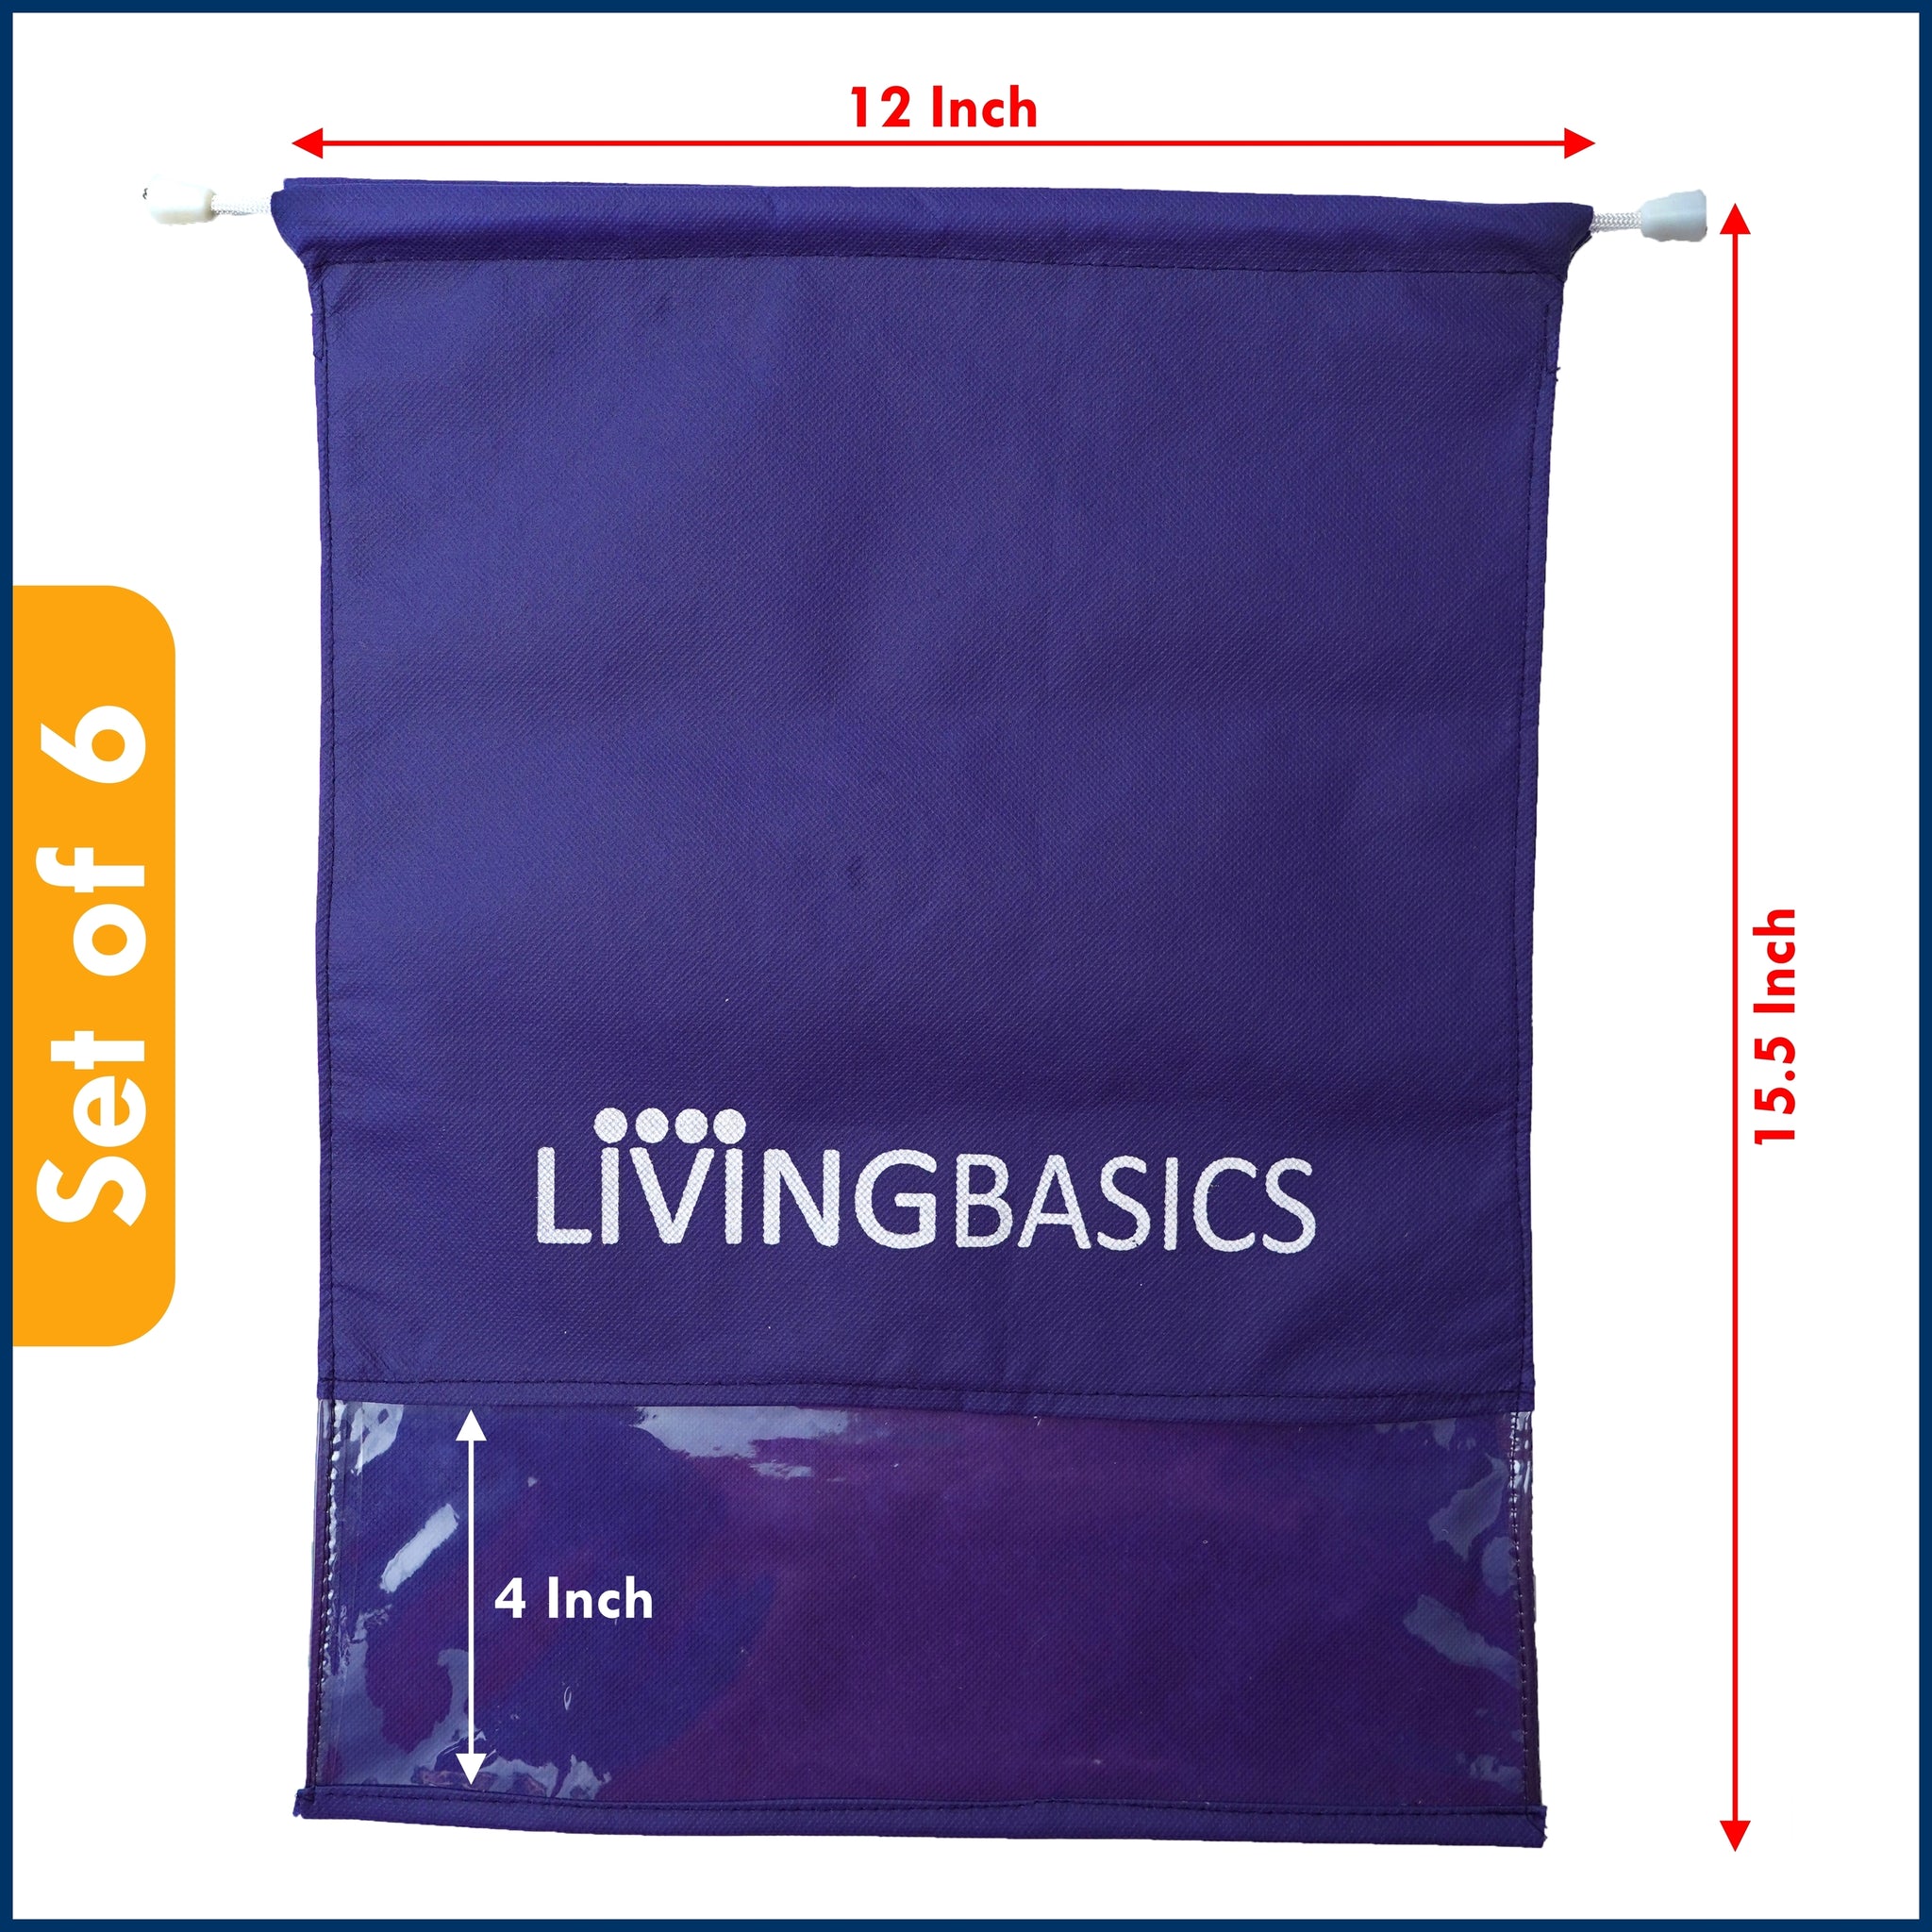 LIVINGBASICS Multi-USE Shoe Cover Bags (Non Woven- Navy Blue, 12 Pieces)